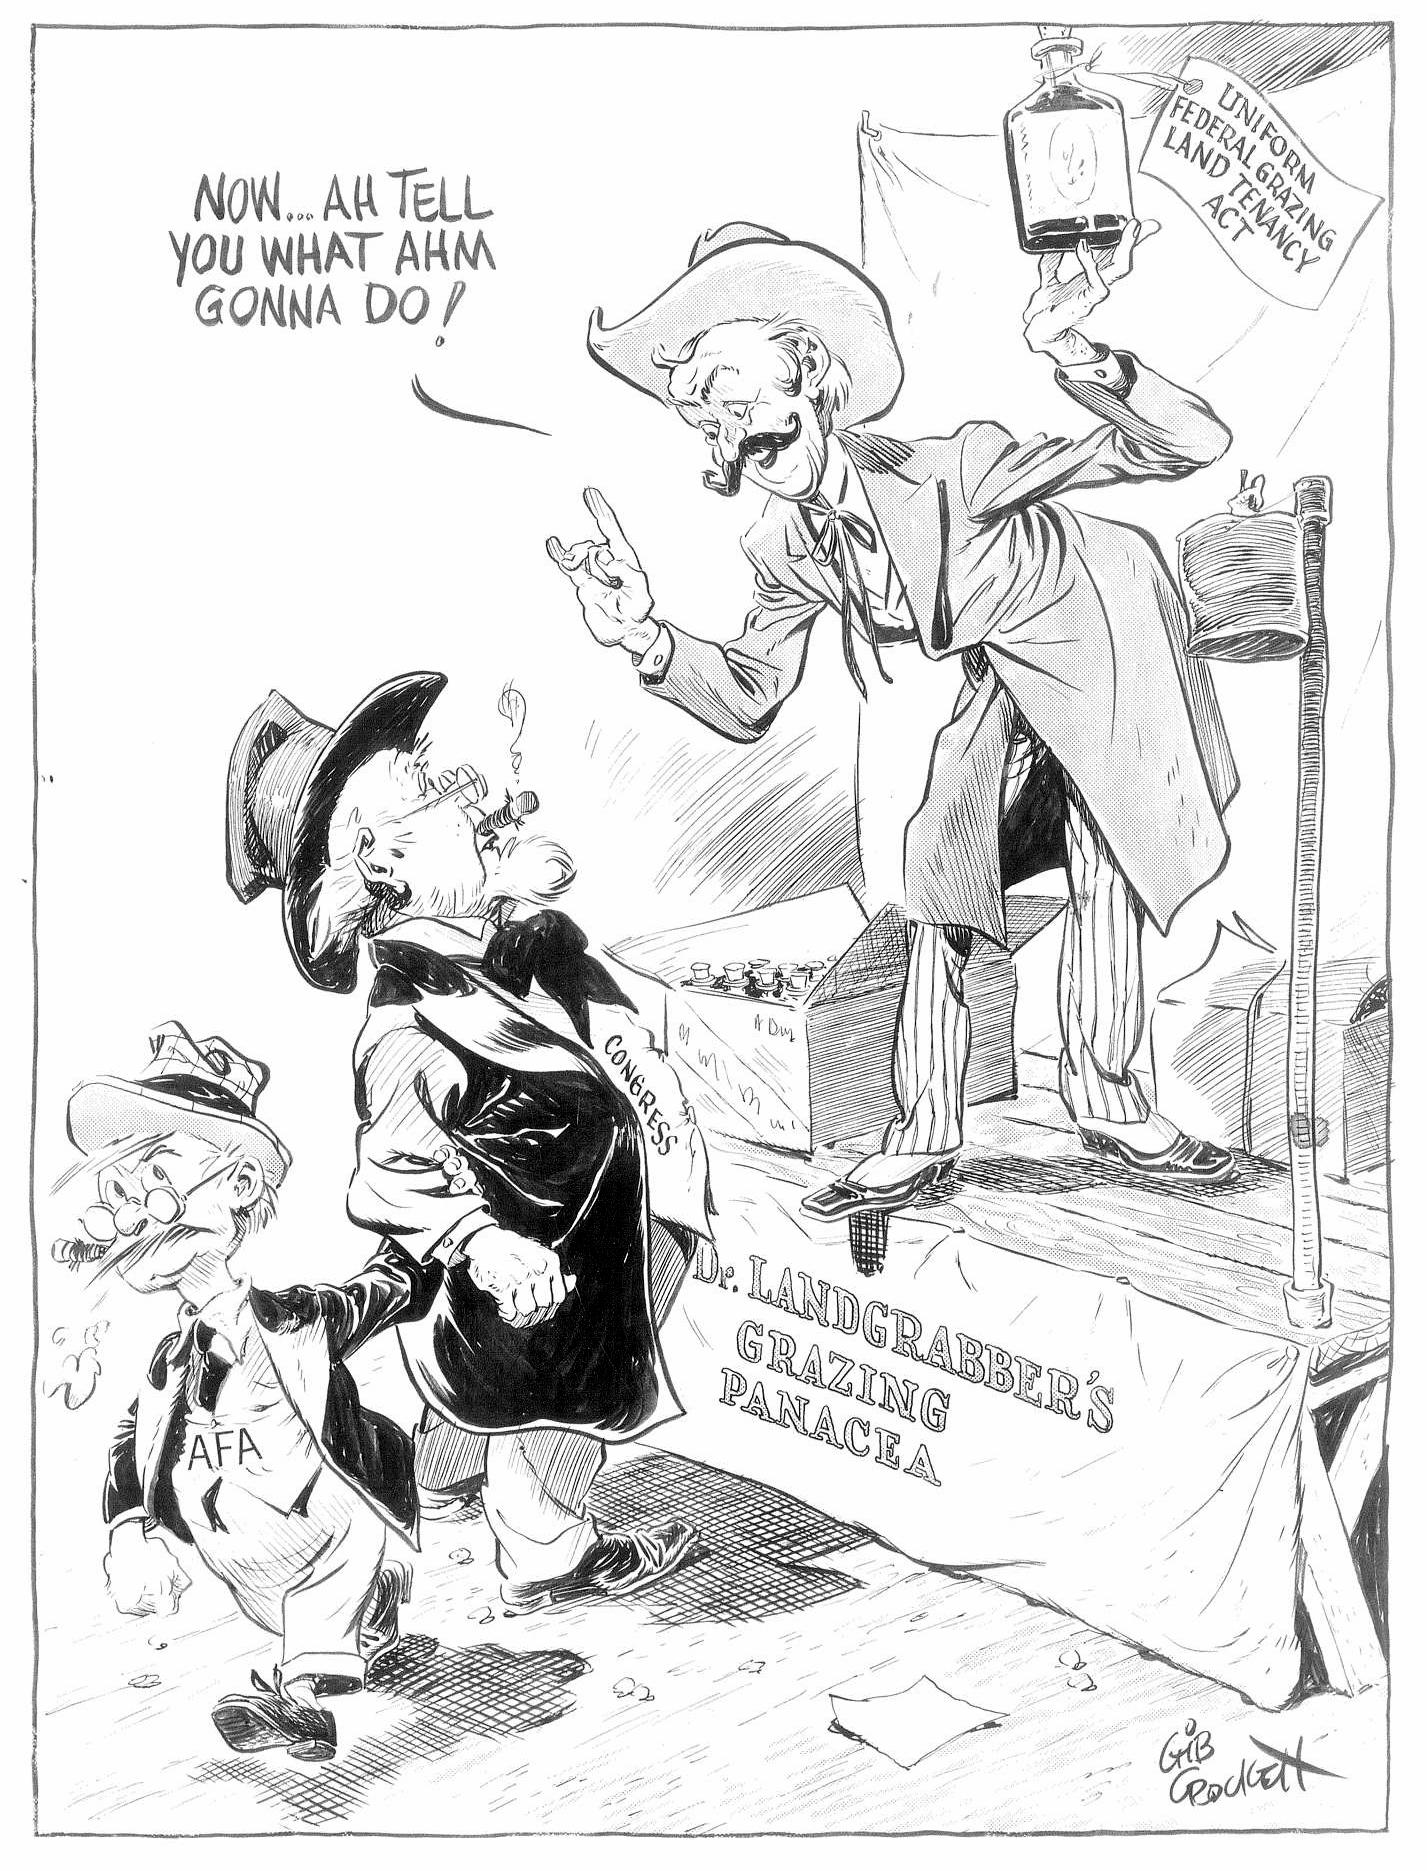 1953 political cartoon